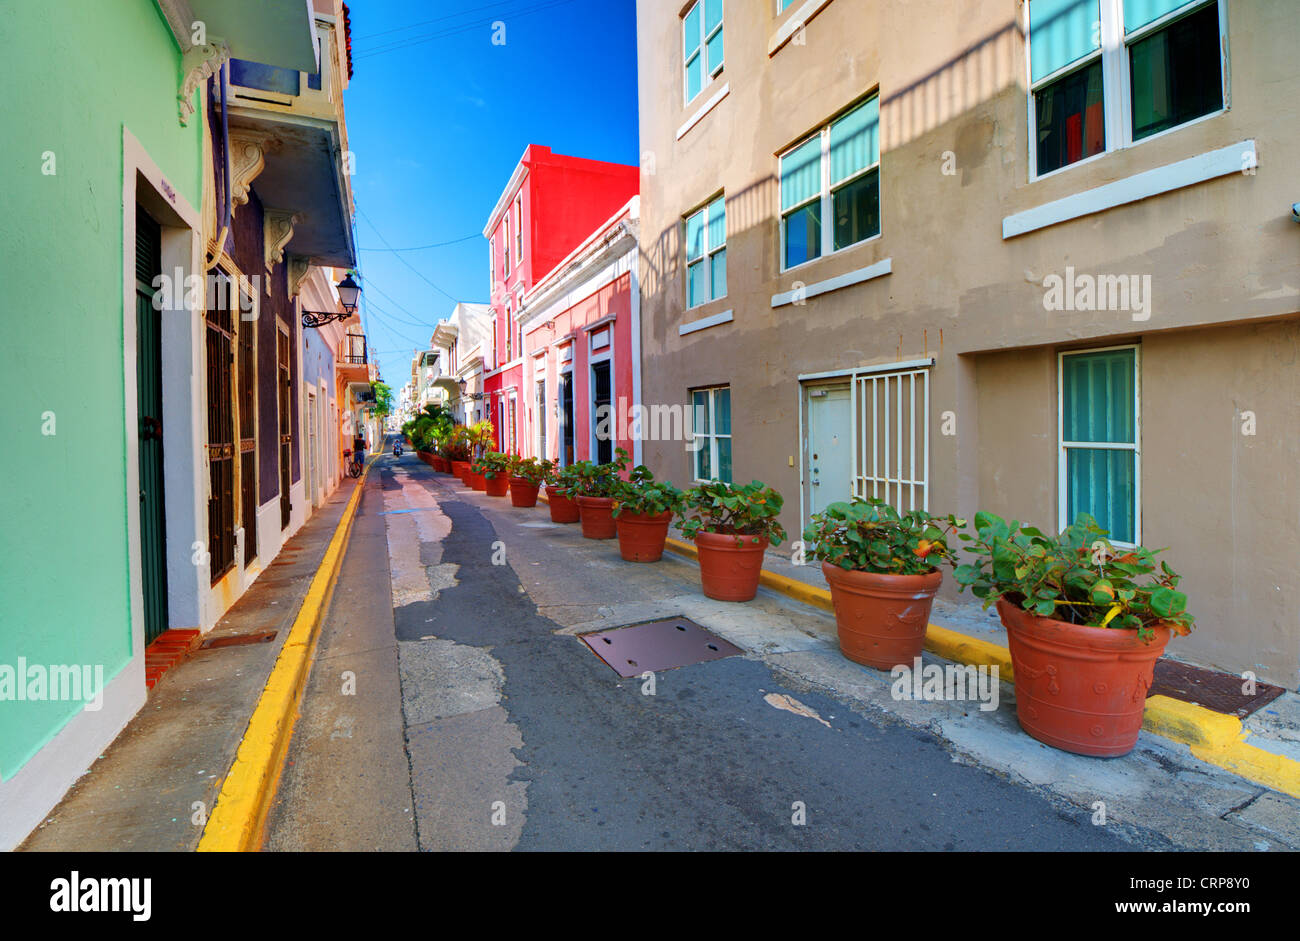 San juan, puerto rico fotografías e imágenes de alta resolución - Alamy